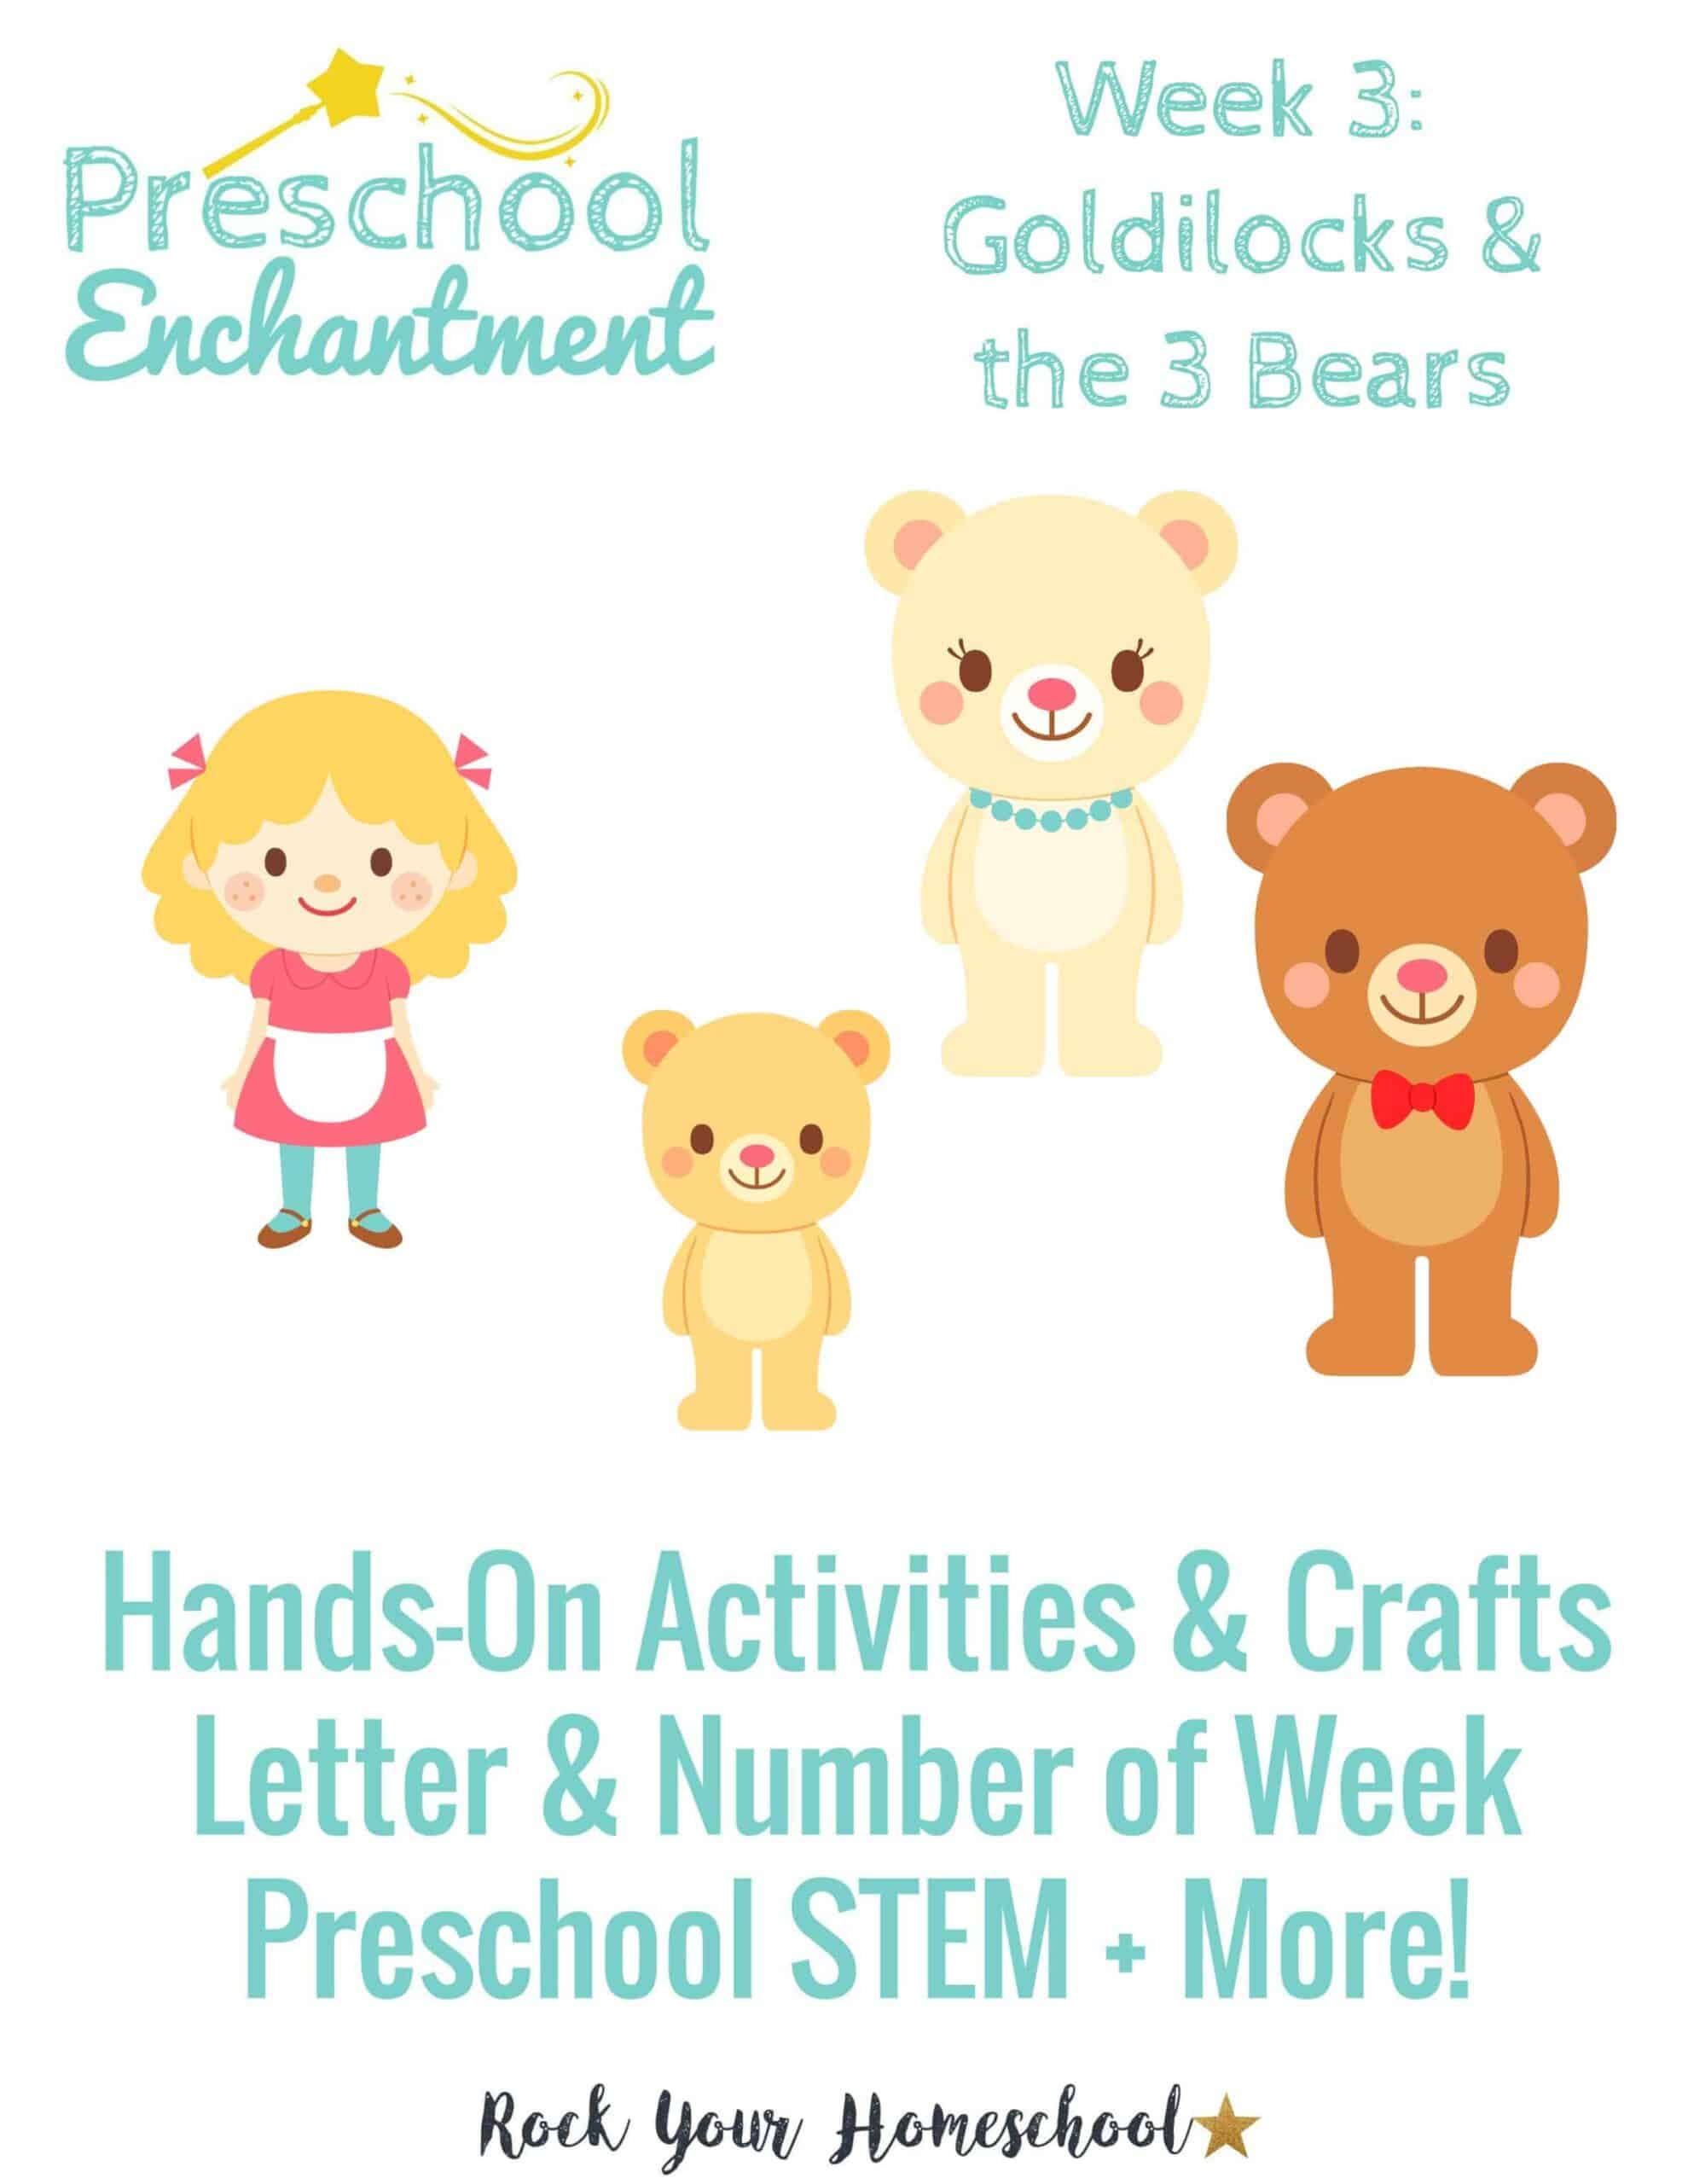 Goldilocks & the Three Bears is the Preschool Enchantment Unit Study for week 3.